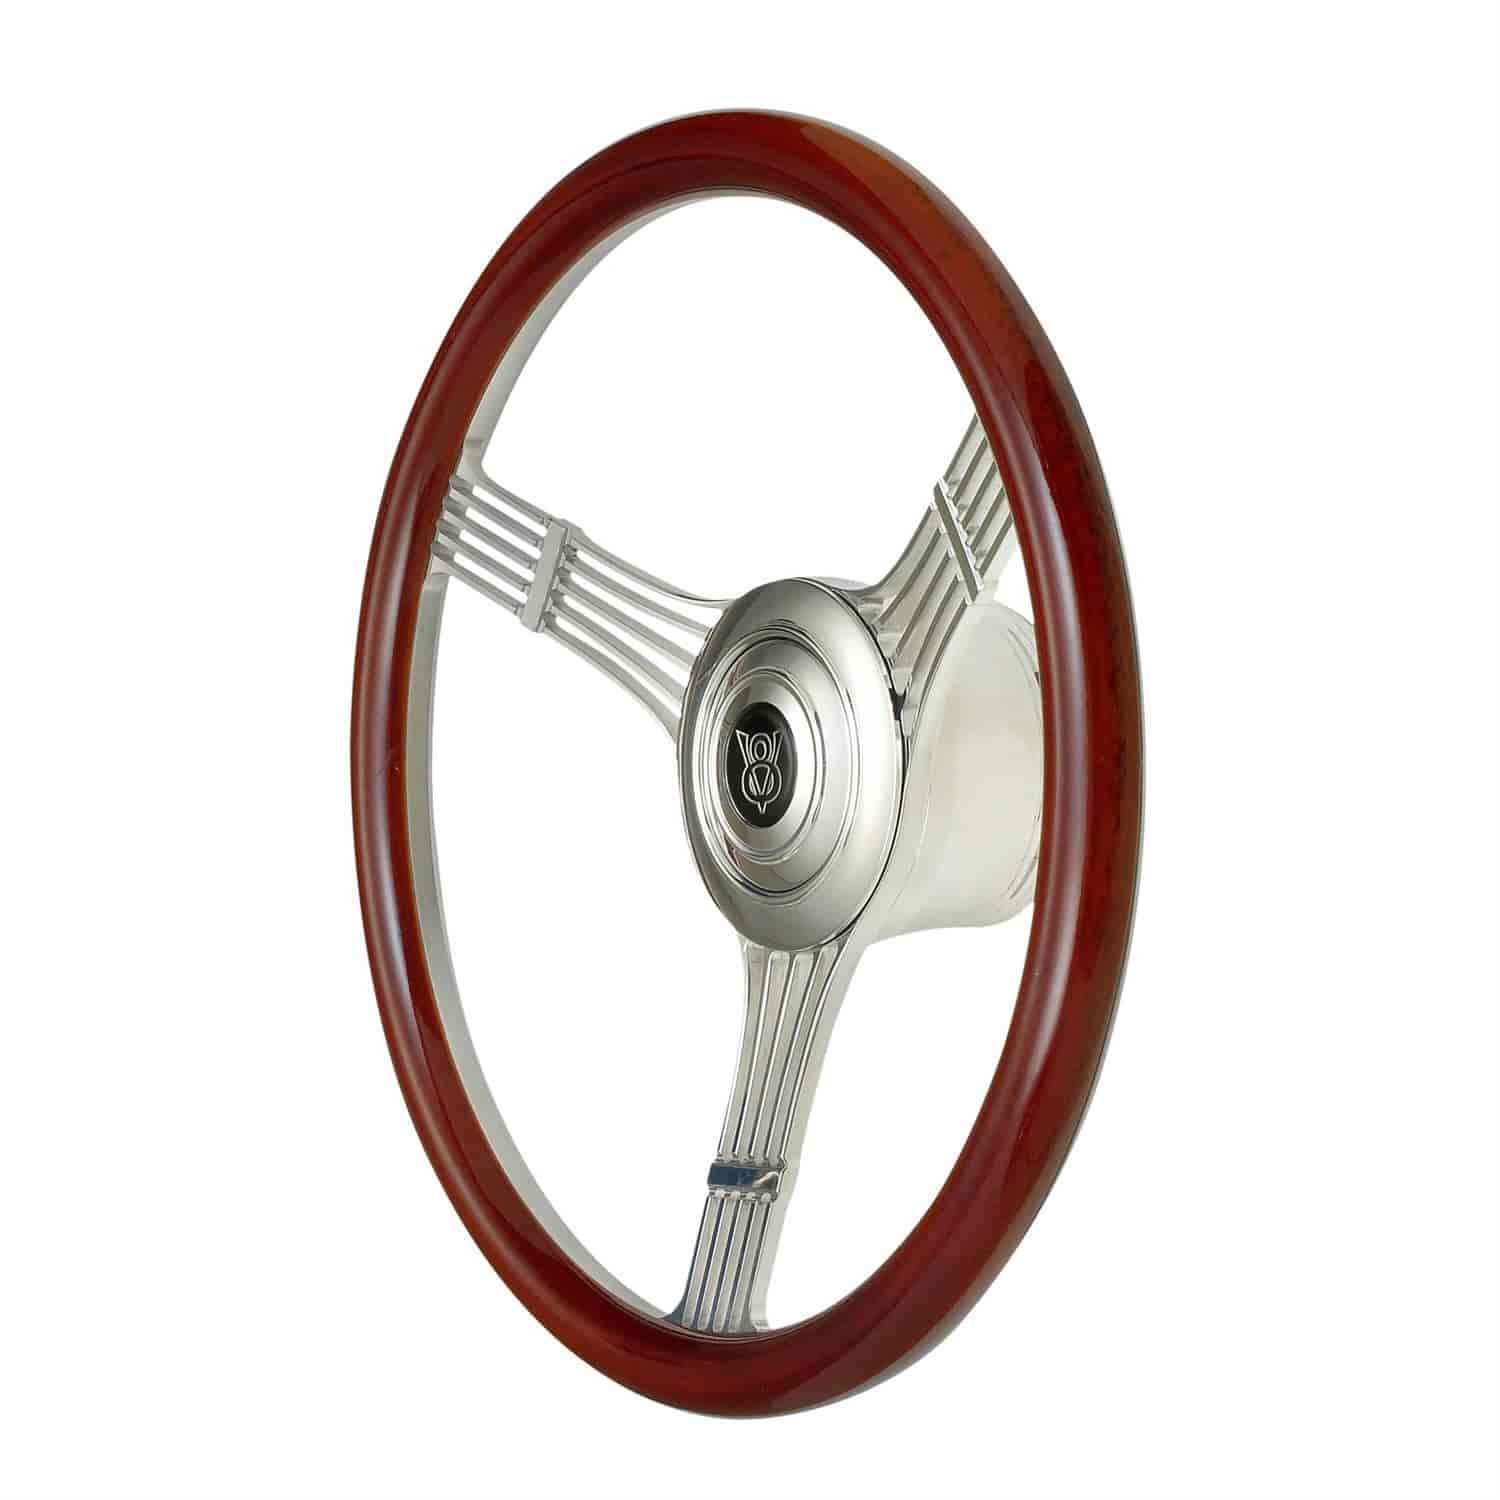 GT Retro Banjo Leather Steering Wheel Diameter: 15.5"